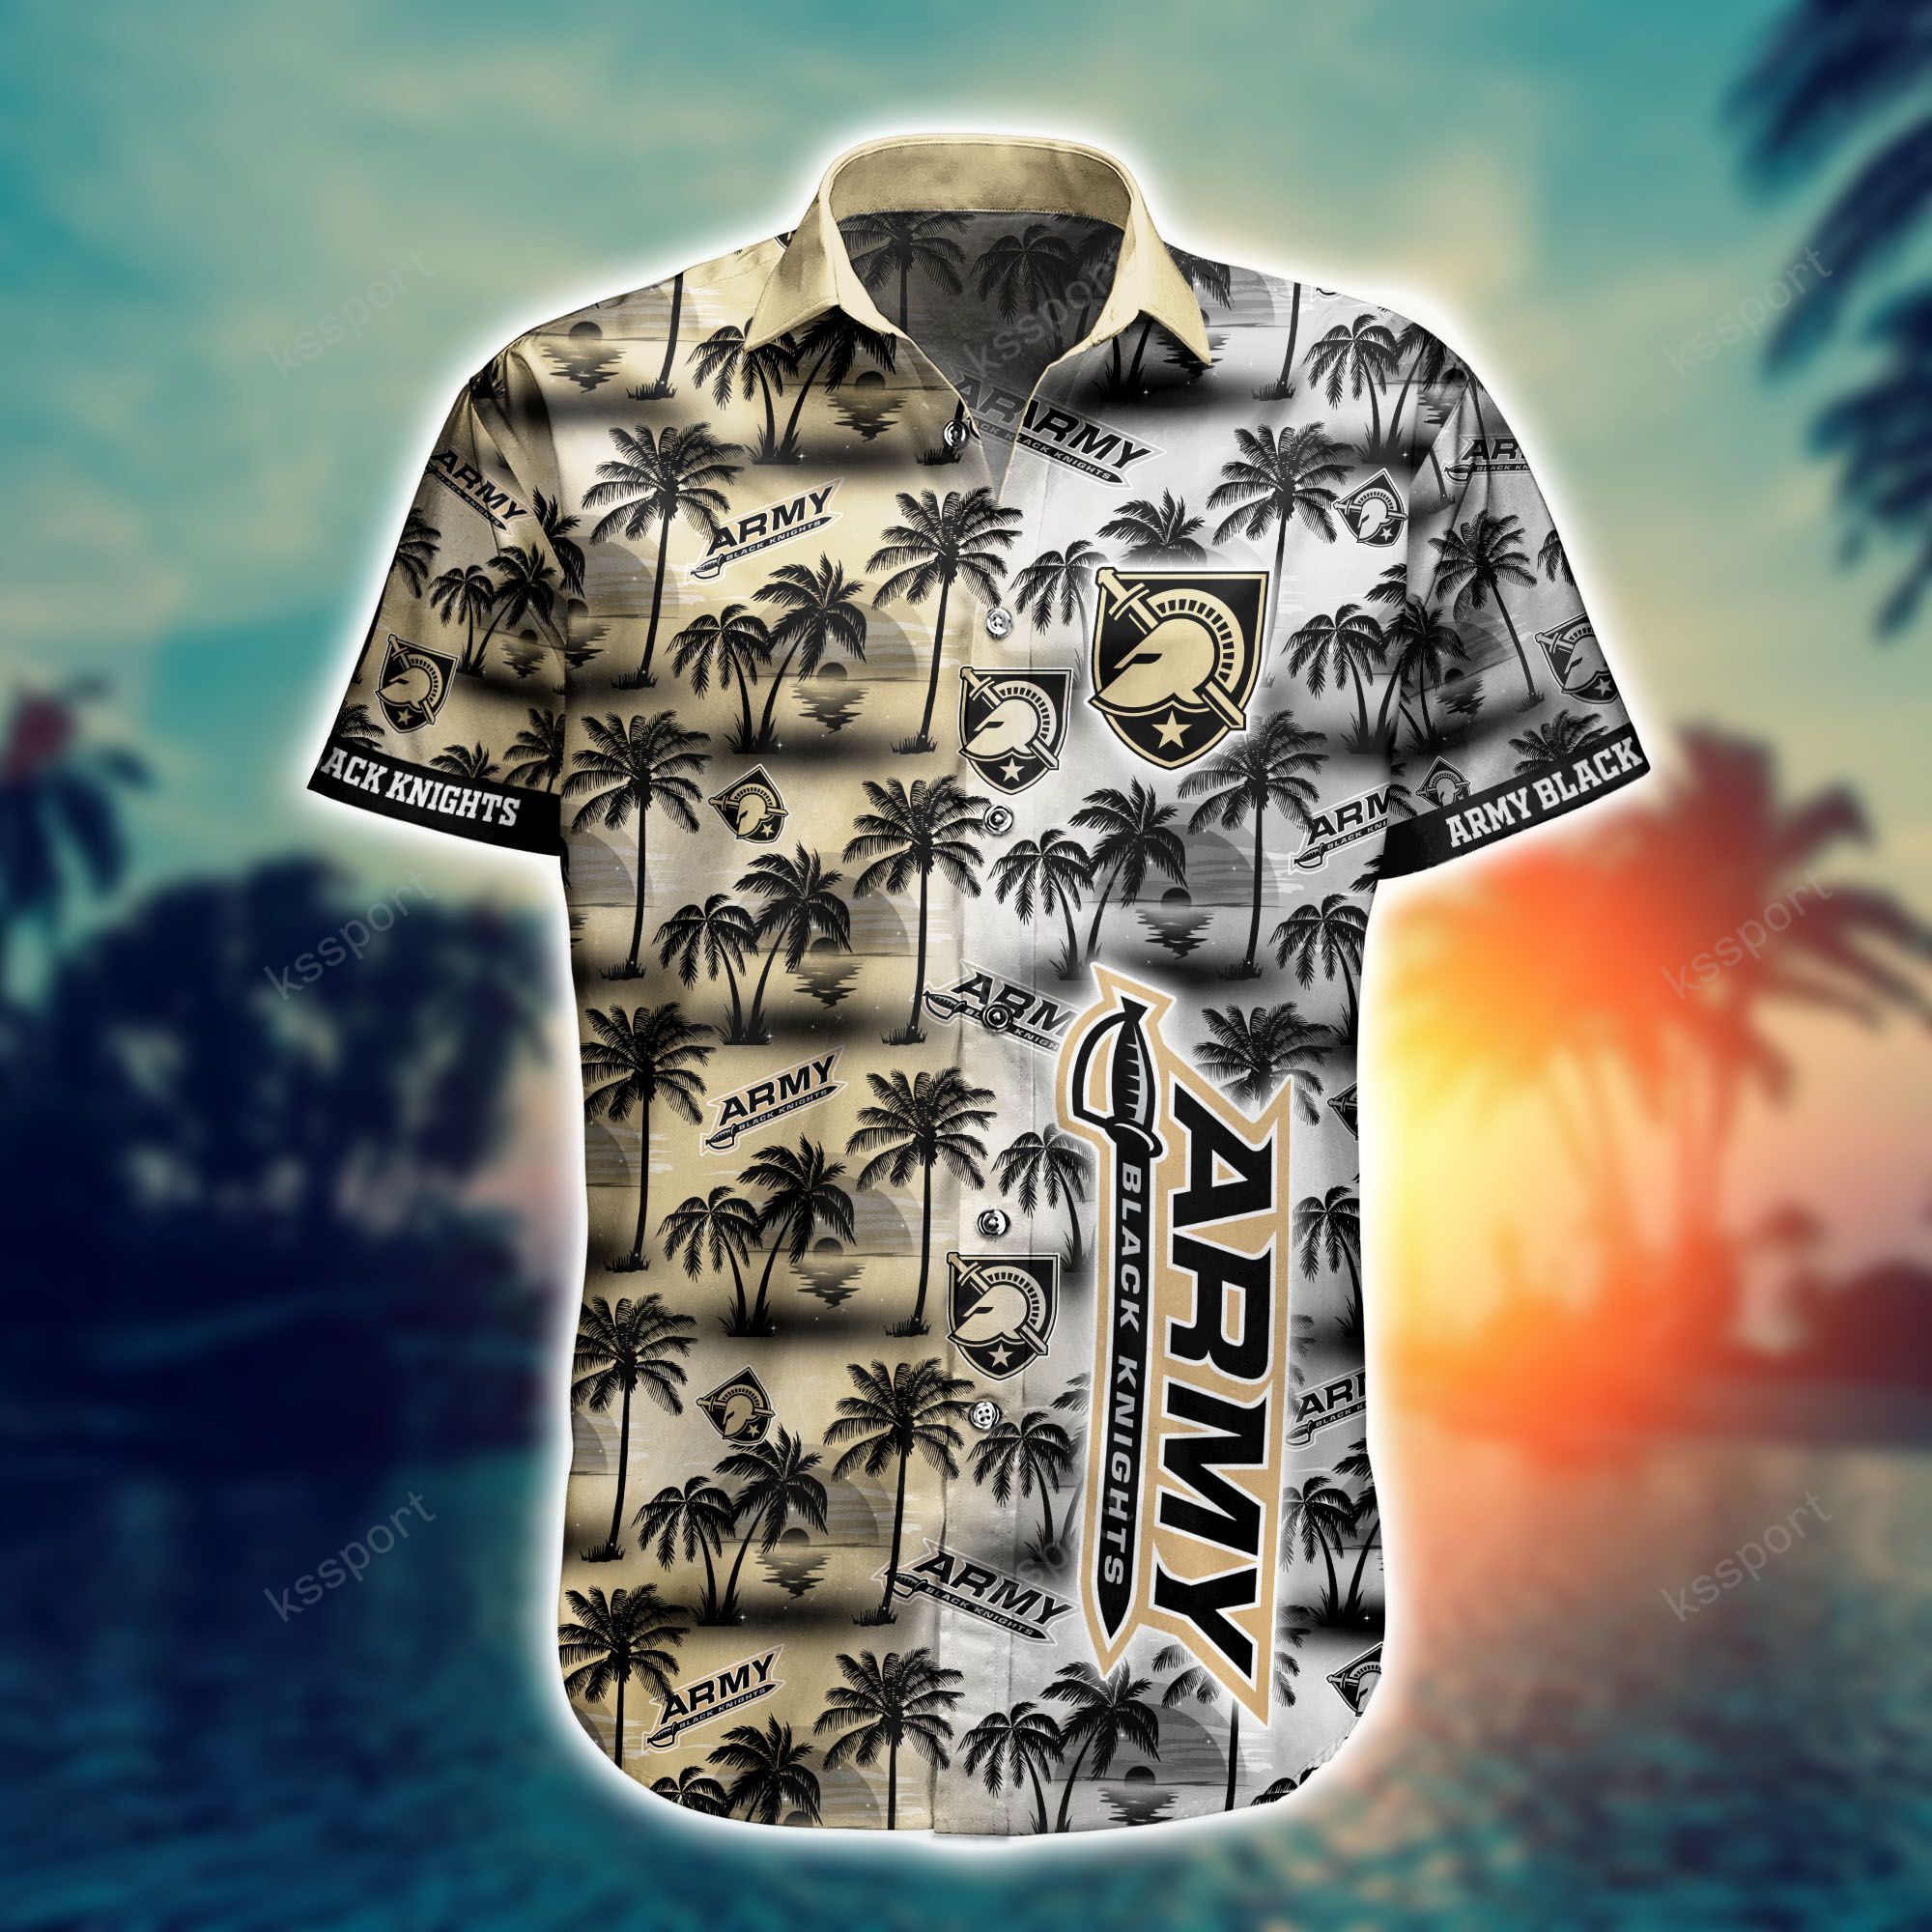 Hawaiian shirt and shorts is a great way to look stylish at a beach party 2